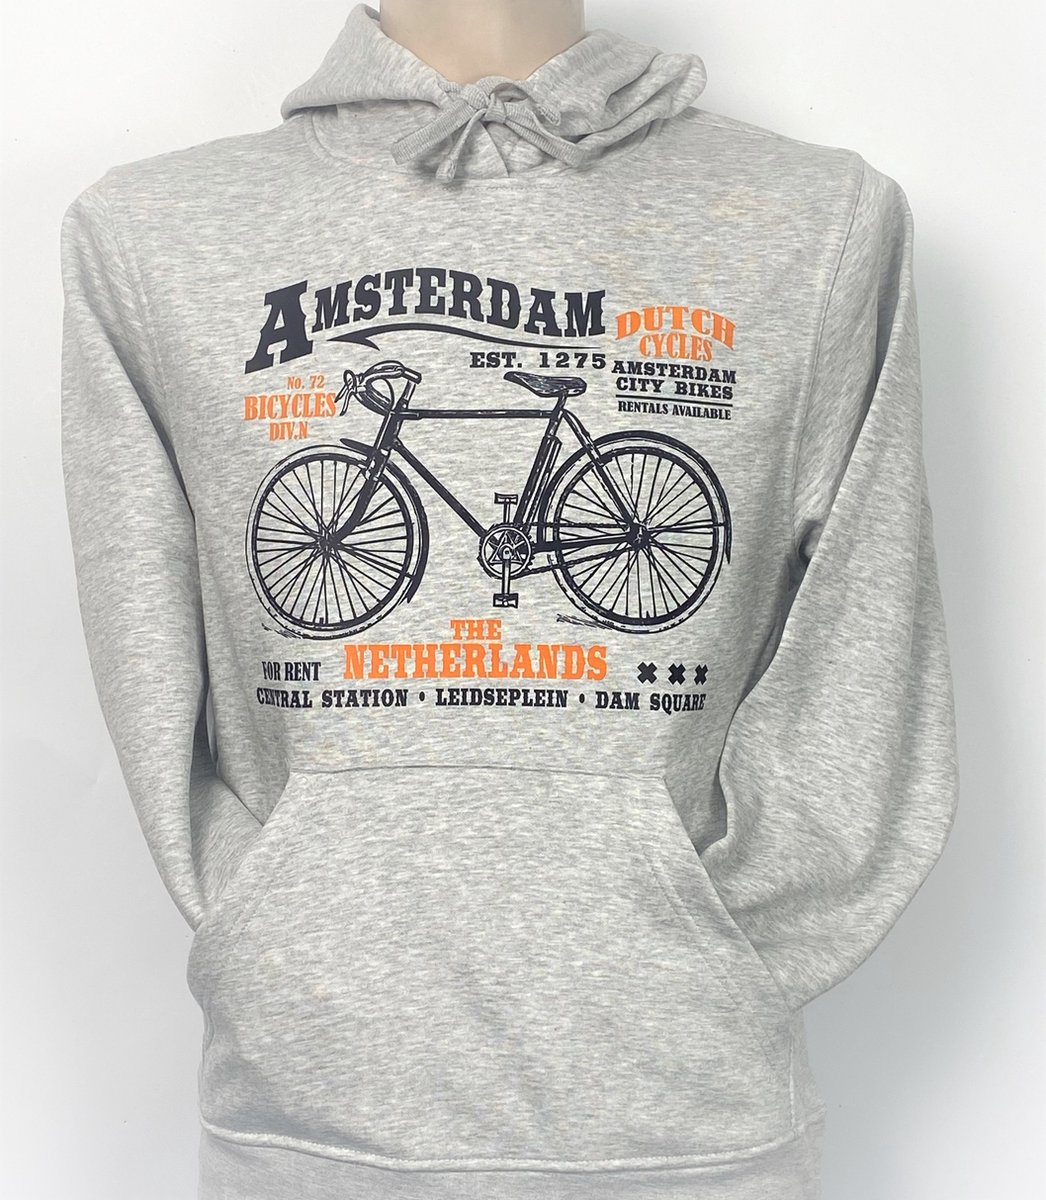 Hooded Sweater - Met Trekkoord - Capuchon - Chill - Trui - Vest - met capuchon - Outdoor - Fiets - 1275 -Amsterdam - Bike Town - Travel - Dam Square - City Bike - Sport Grey - Maat L